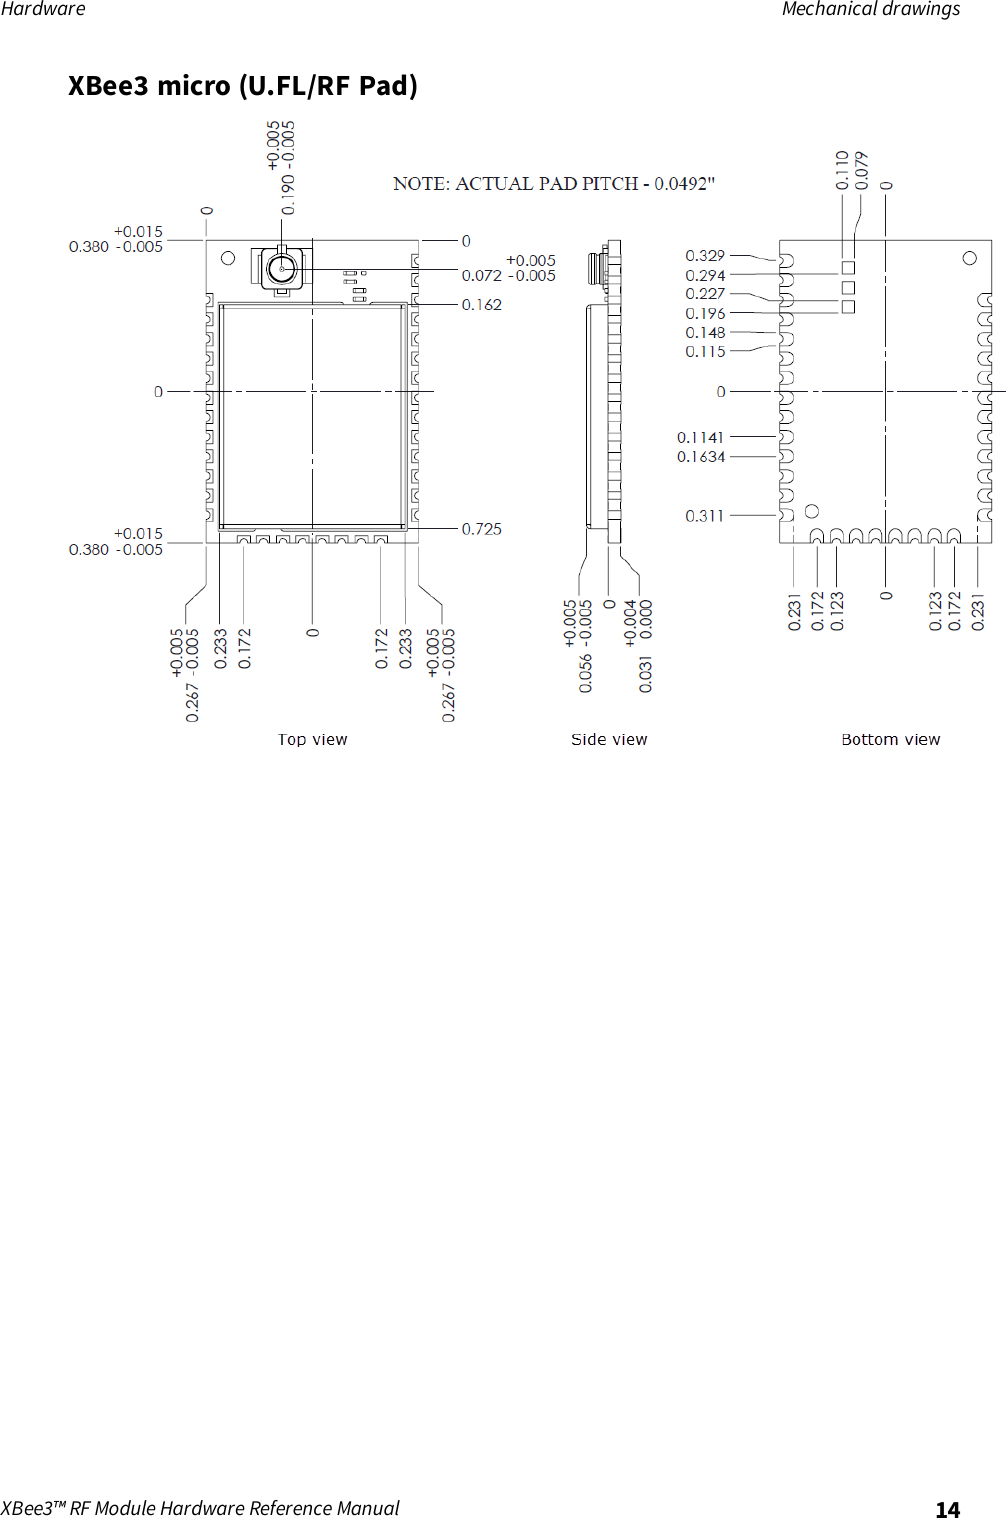 Hardware Mechanical drawingsXBee3™ RF Module Hardware Reference Manual 14XBee3 micro (U.FL/RF Pad)